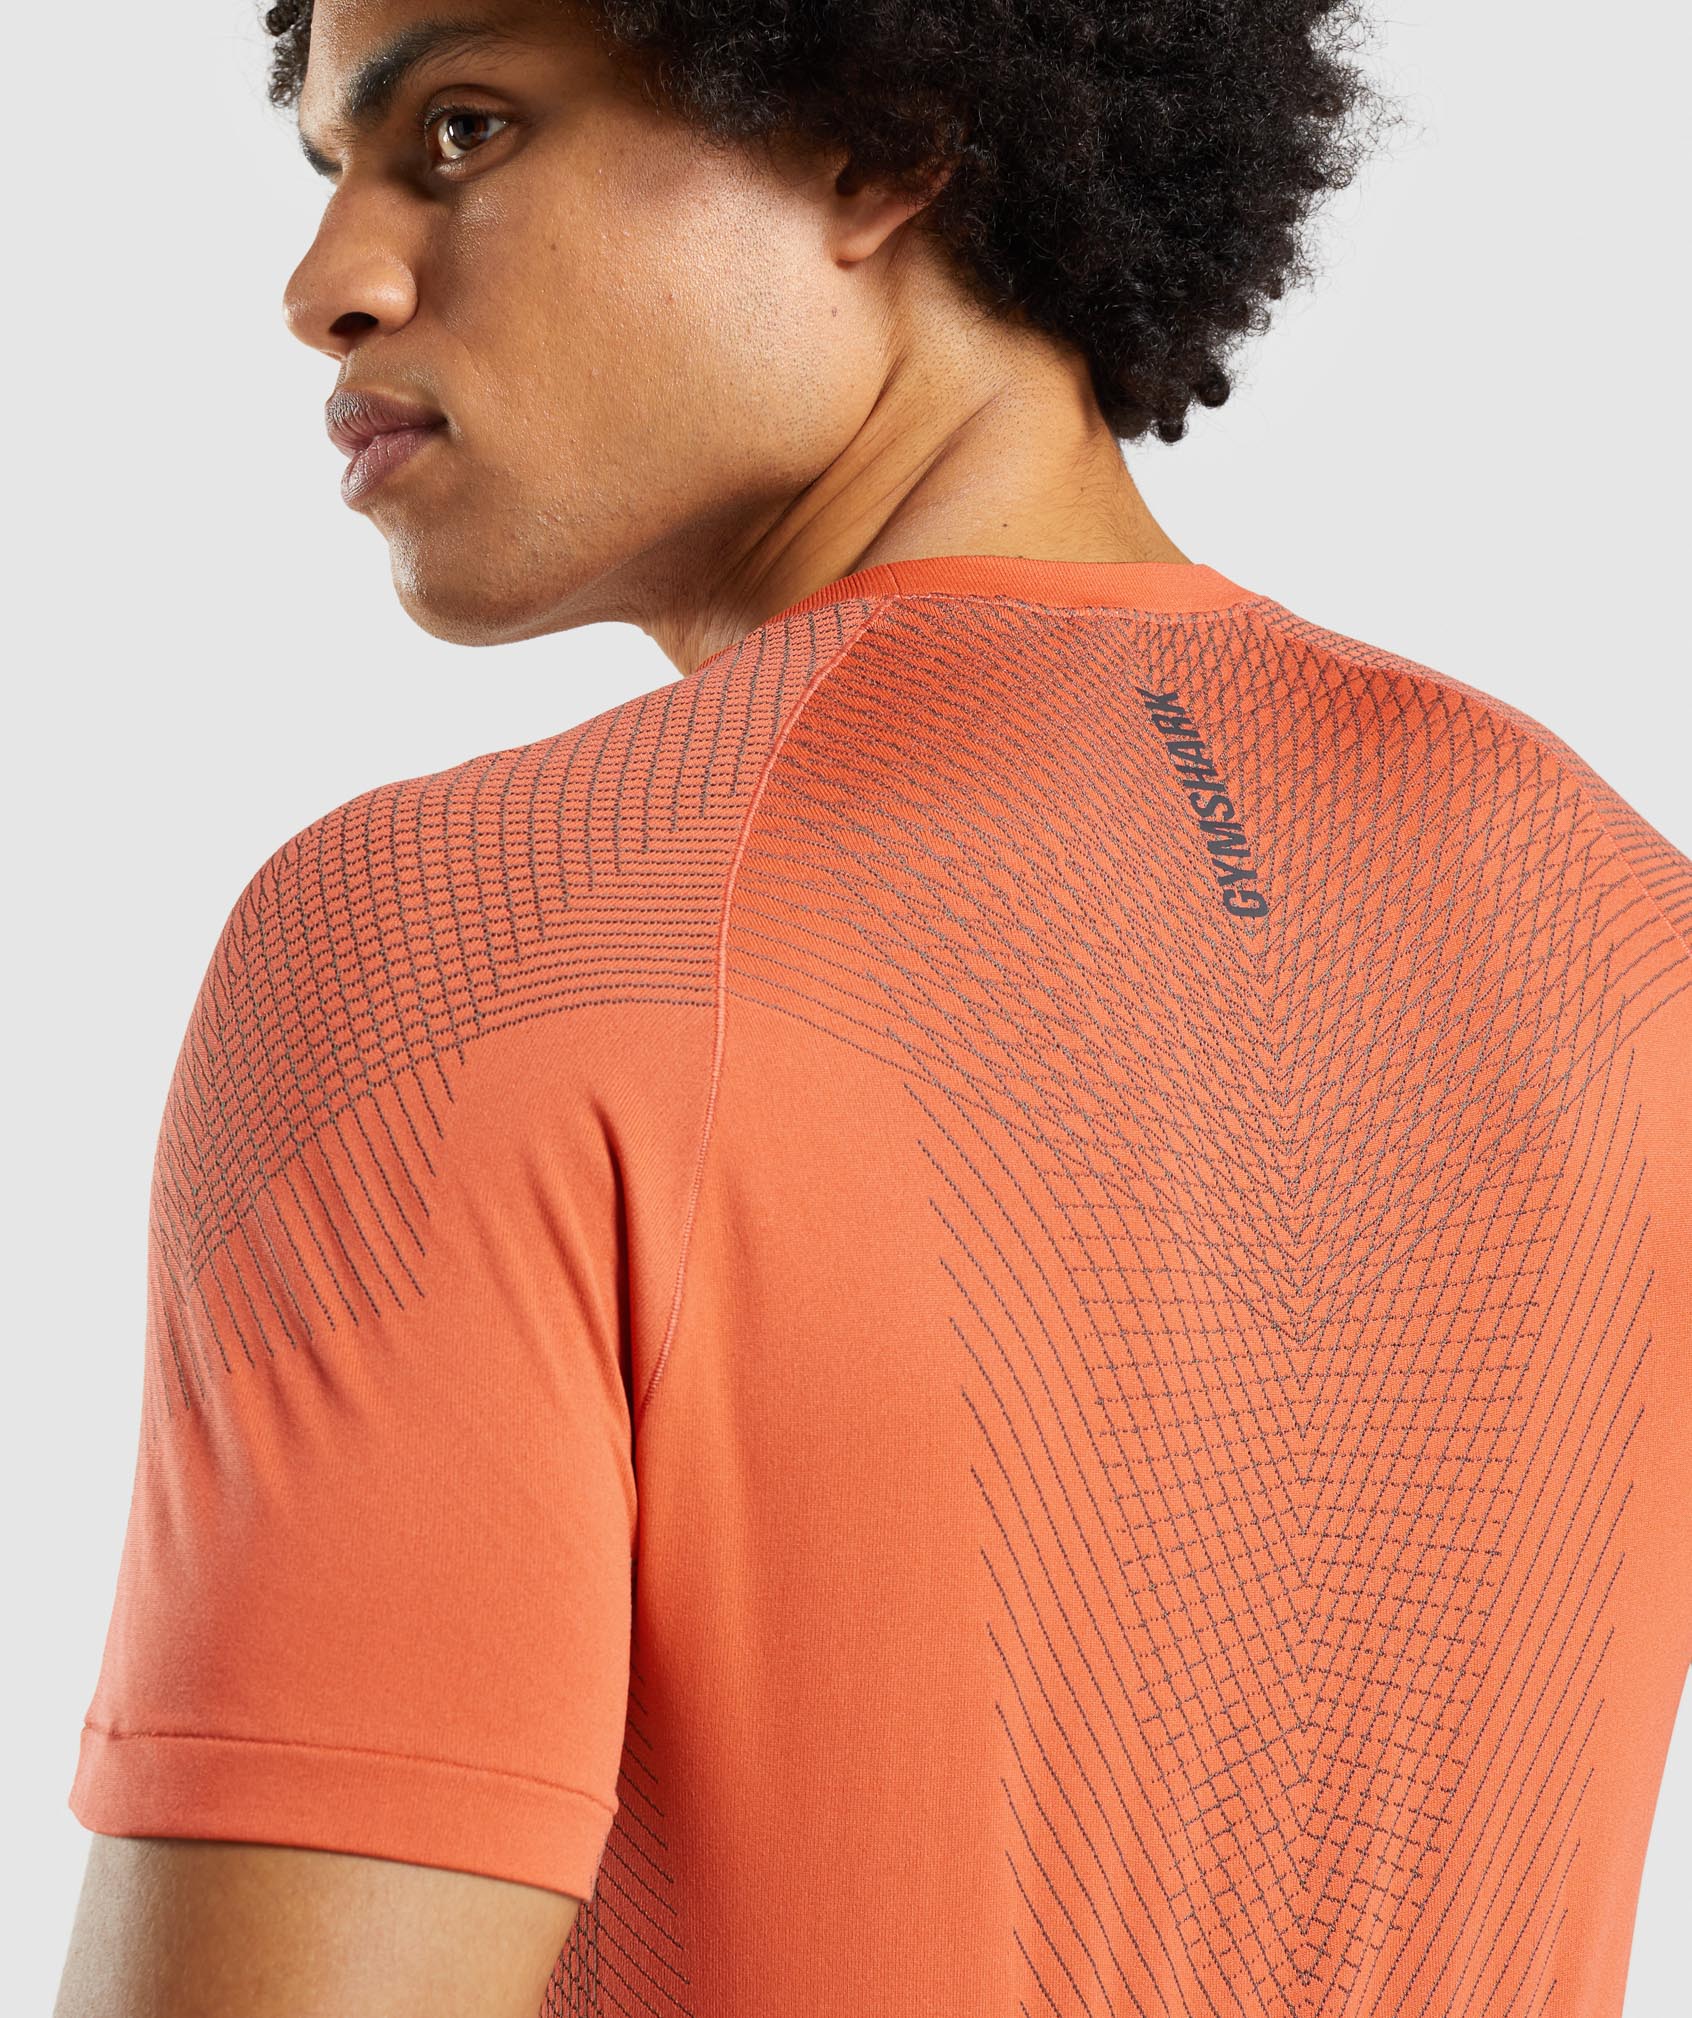 Apex Seamless T-Shirt in Papaya Orange/Onyx Grey - view 5